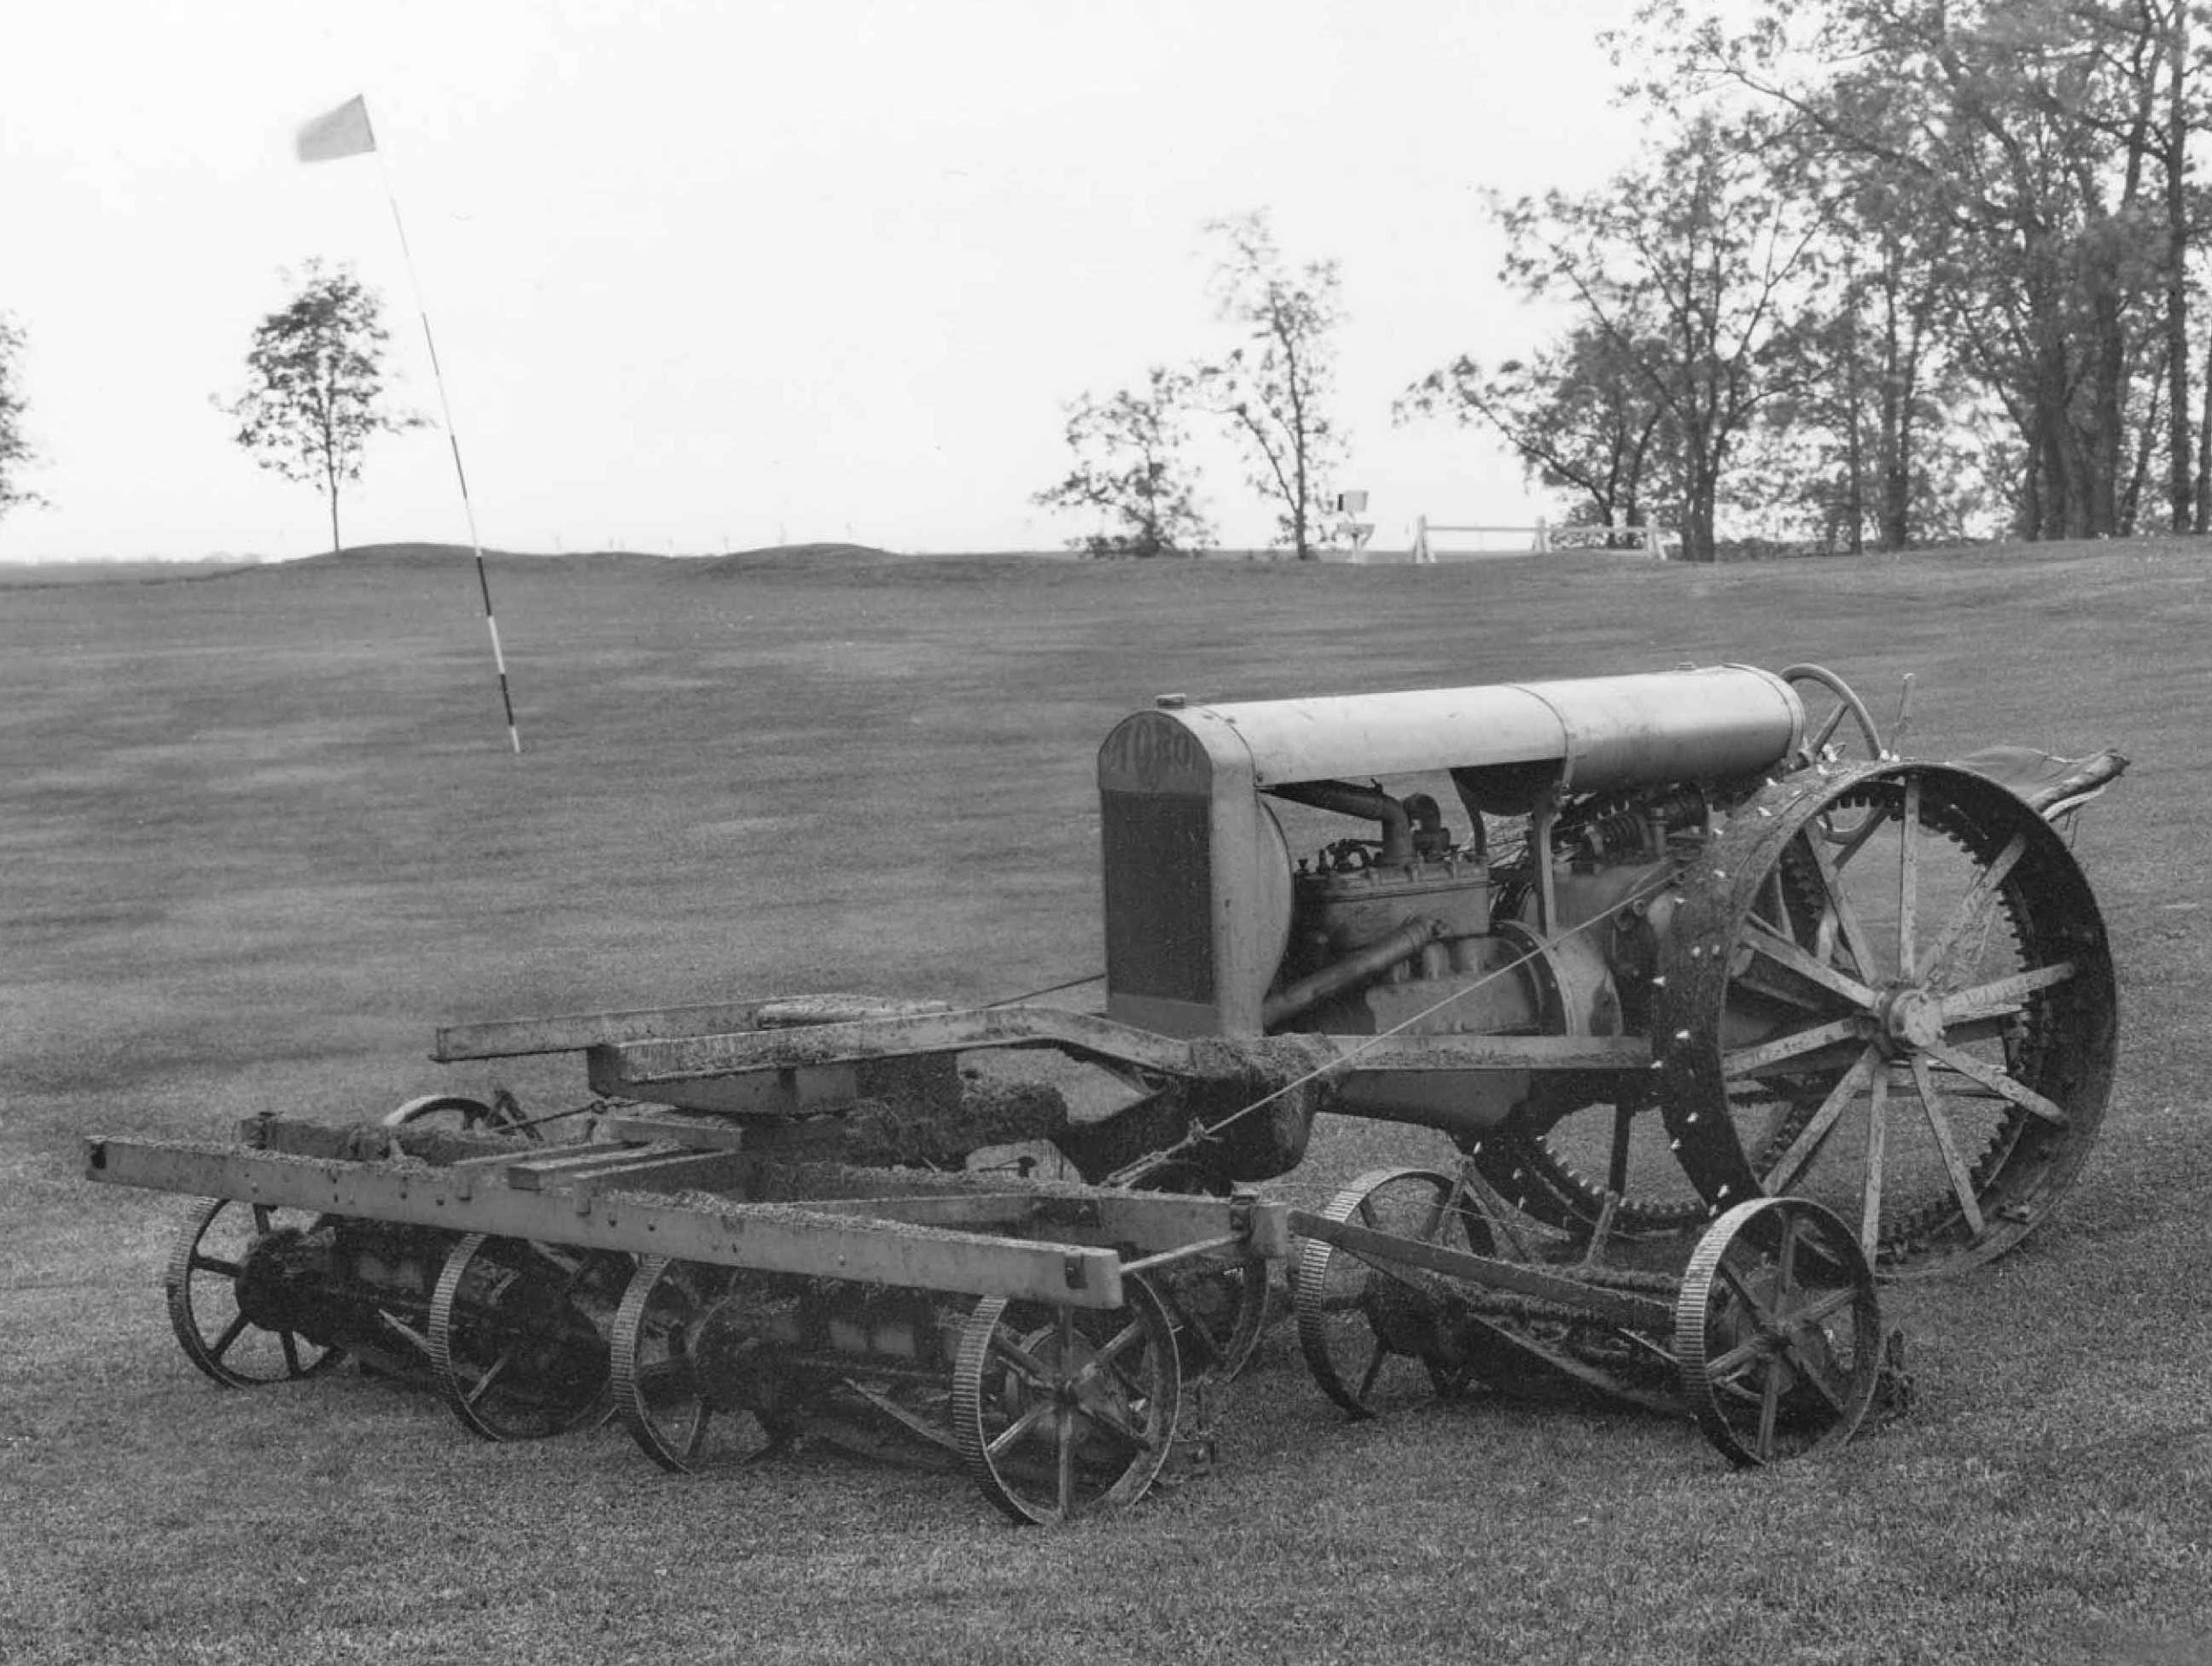 Toro invents The Toro Standard Golf Machine, the industry’s first mechanized fairway mower, for the Minikahda Club in Minneapolis, thus creating the mechanized golf course equipment industry.